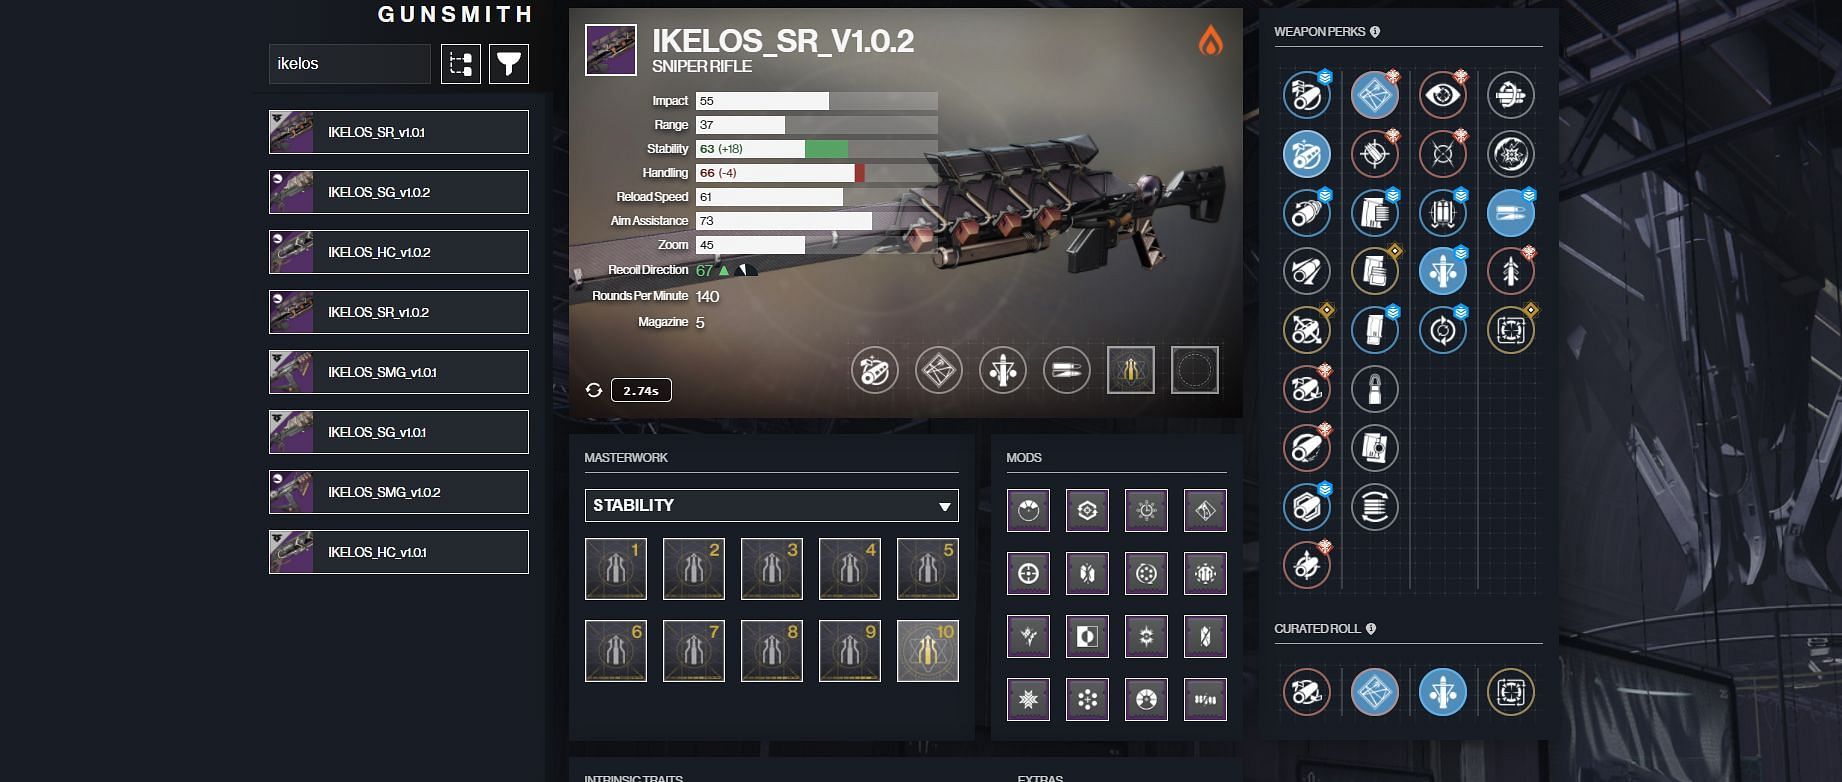 Ikelos SR v1.0.2 best perks (Image via Destiny 2 Gunsmith)